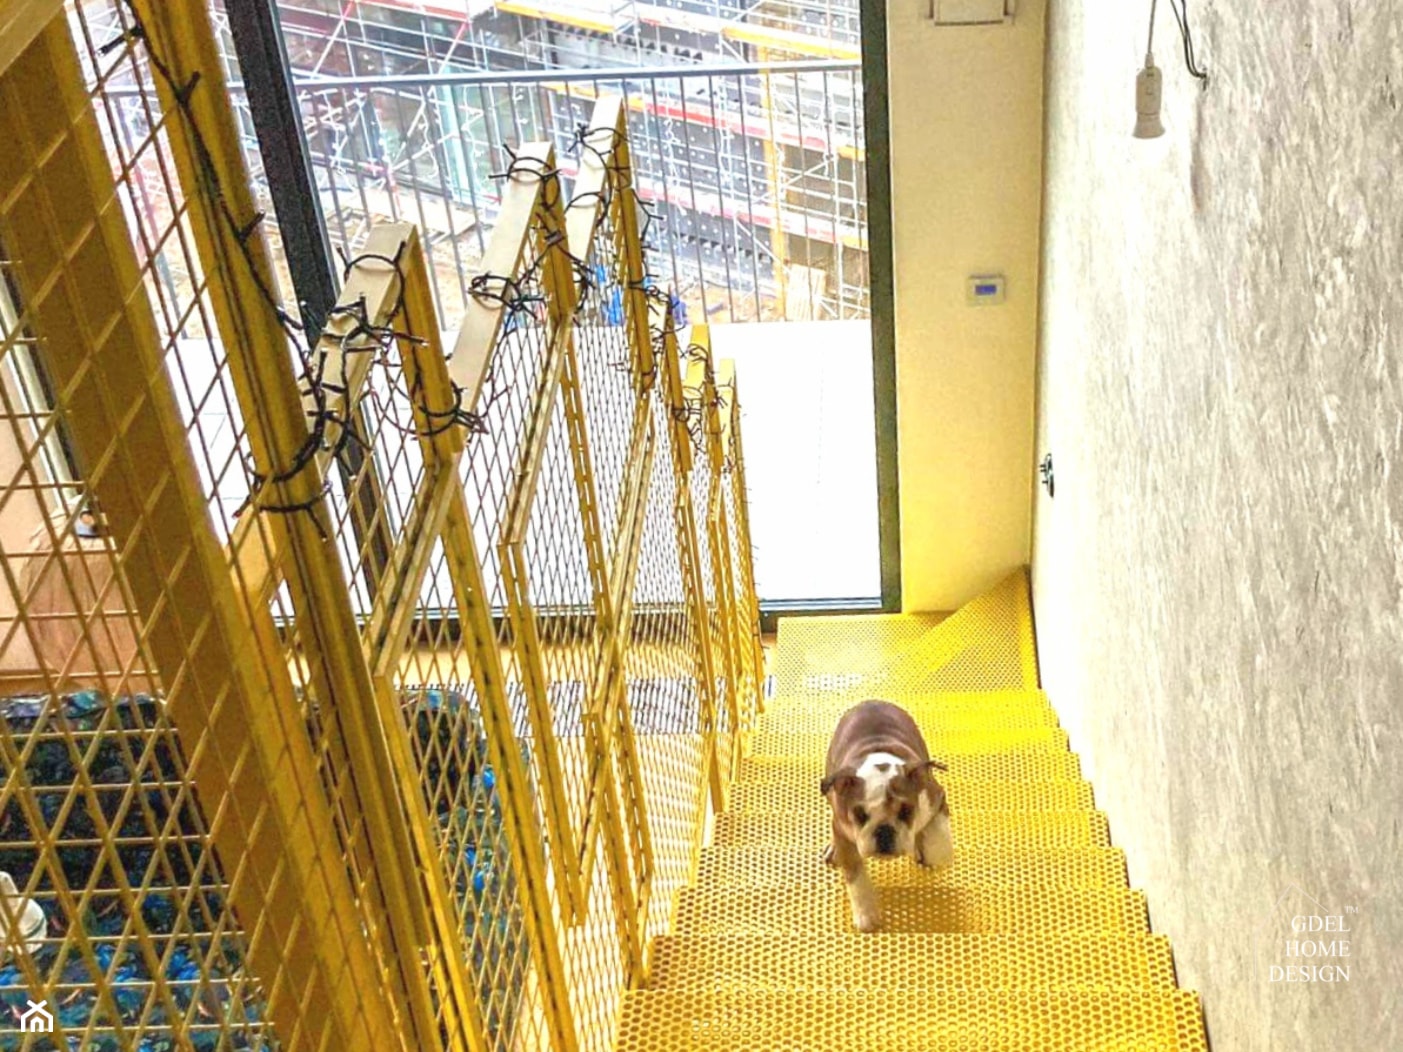 Żółte schody metalowe - zdjęcie od GDEL Home Design - Homebook